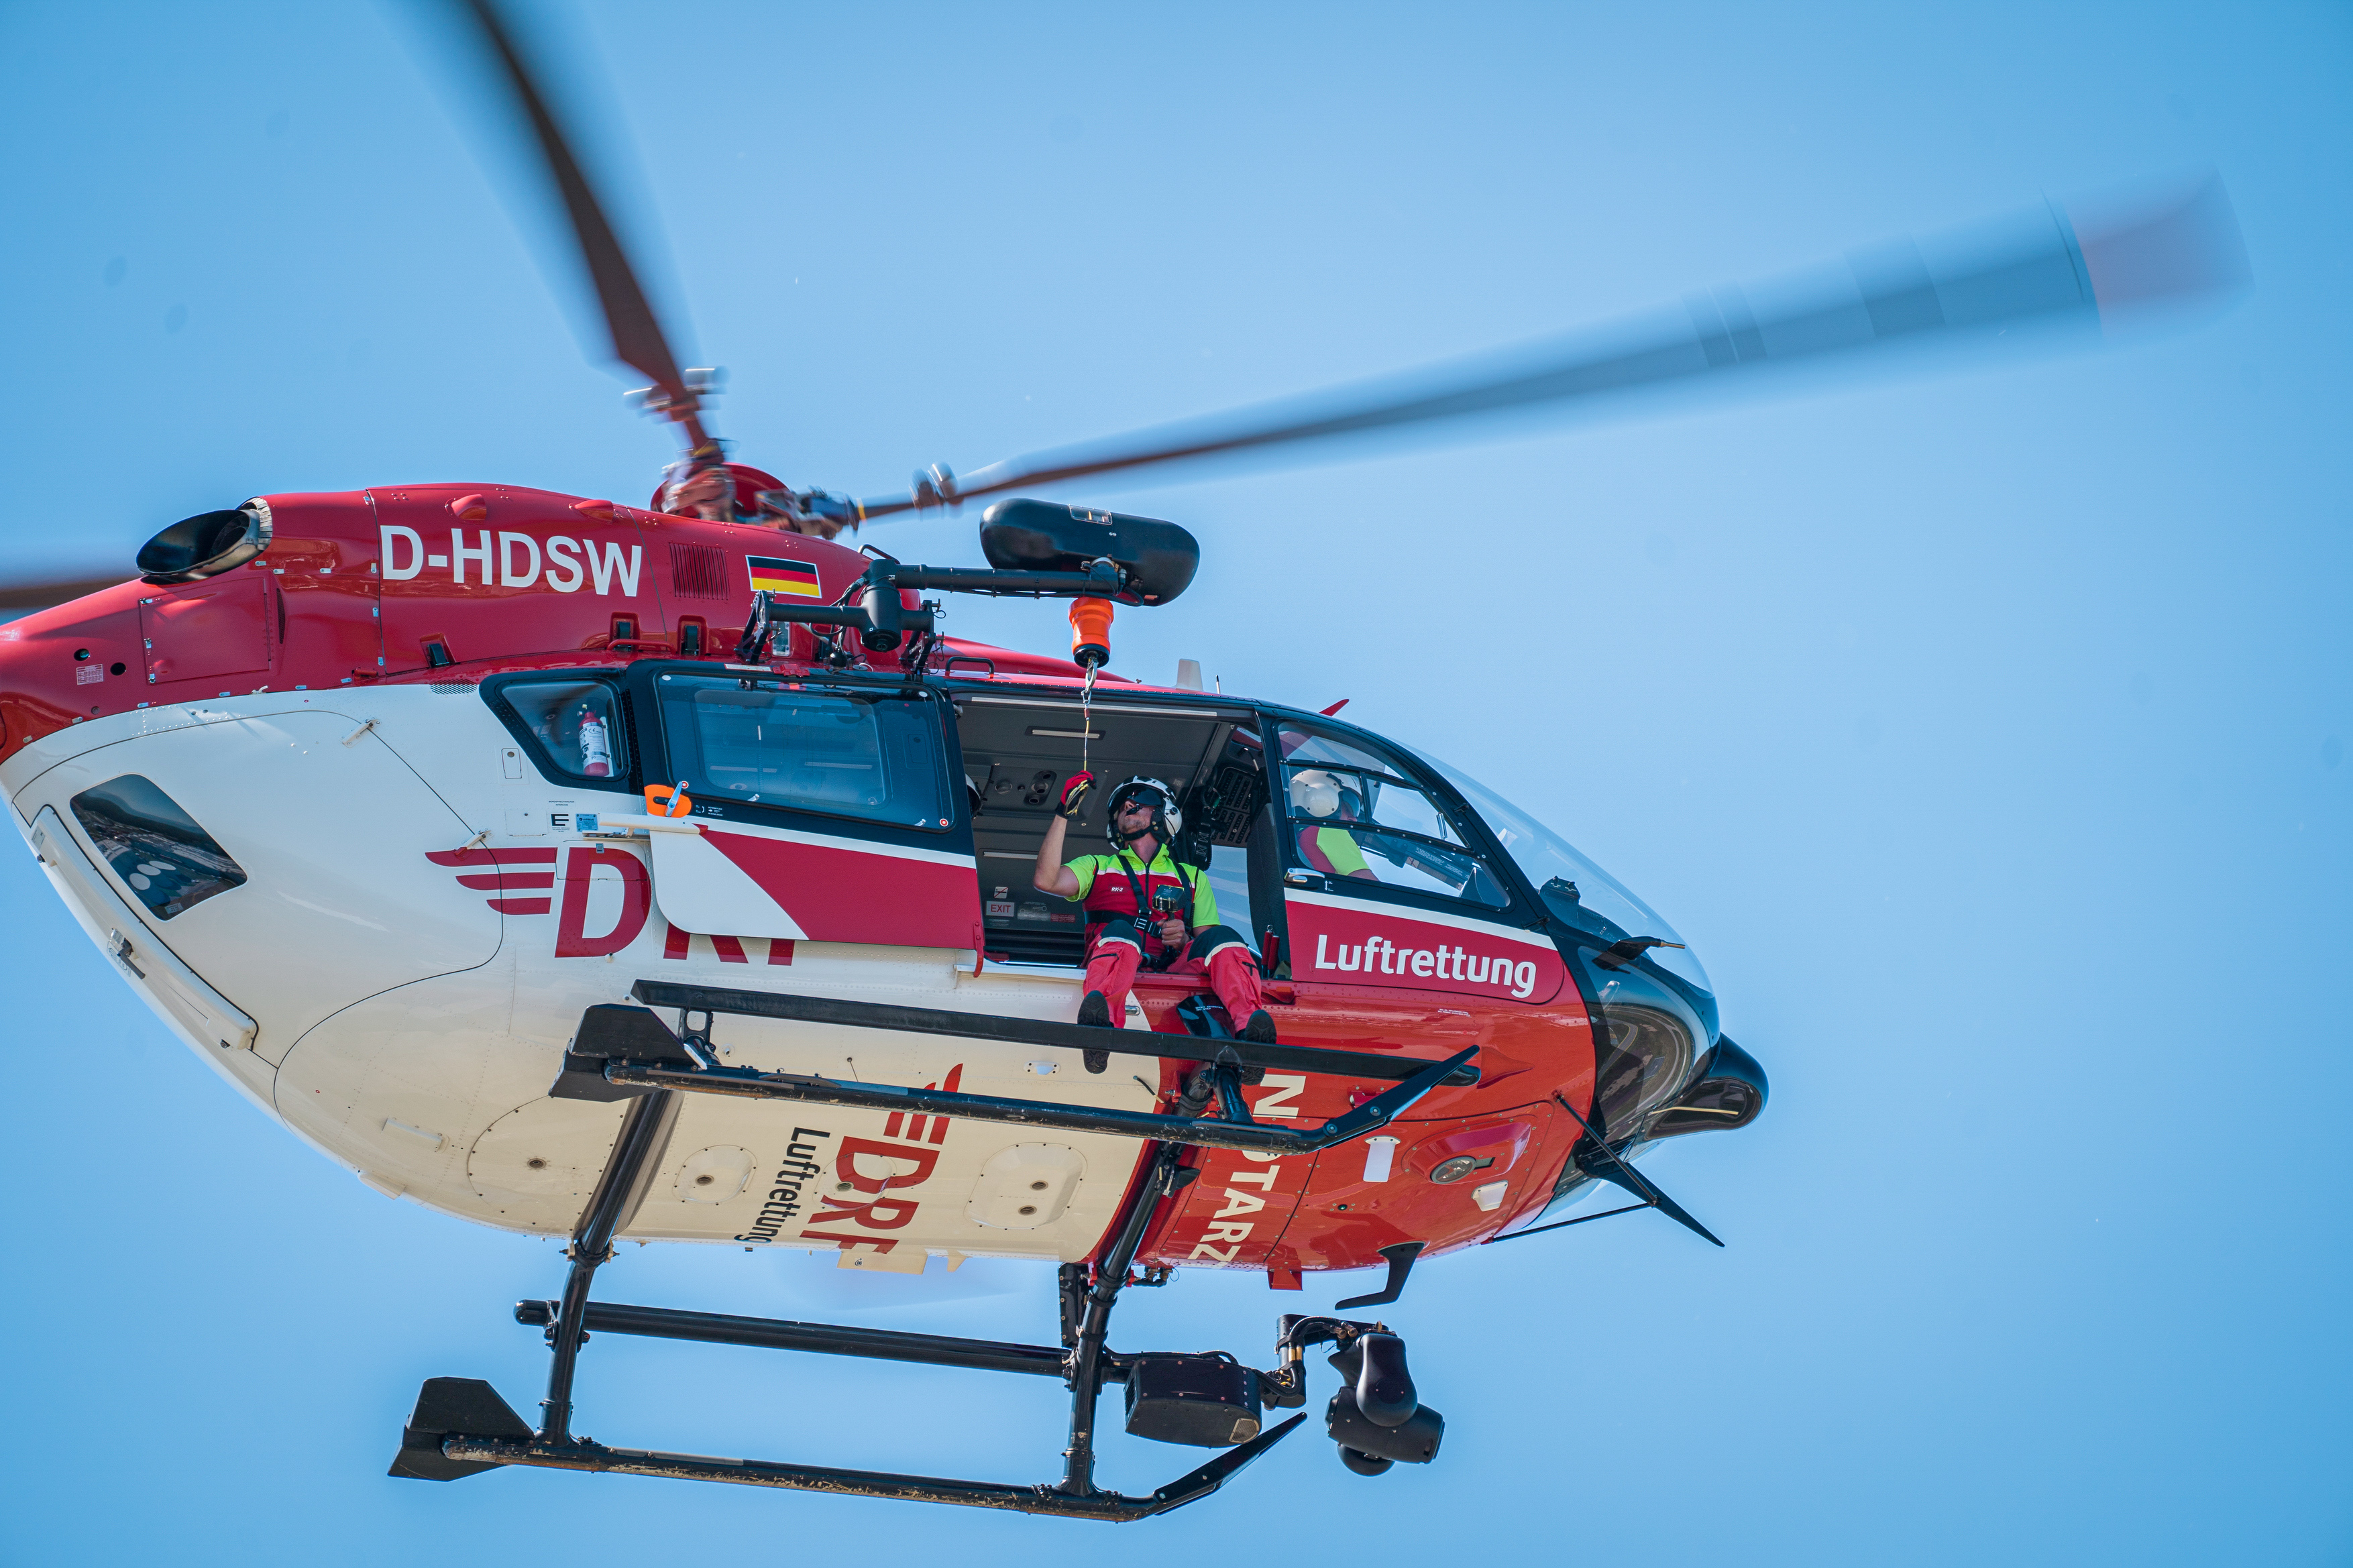 Reiser and DRF Luftrettung creating ‘world’s most advanced rescue hoist training device’